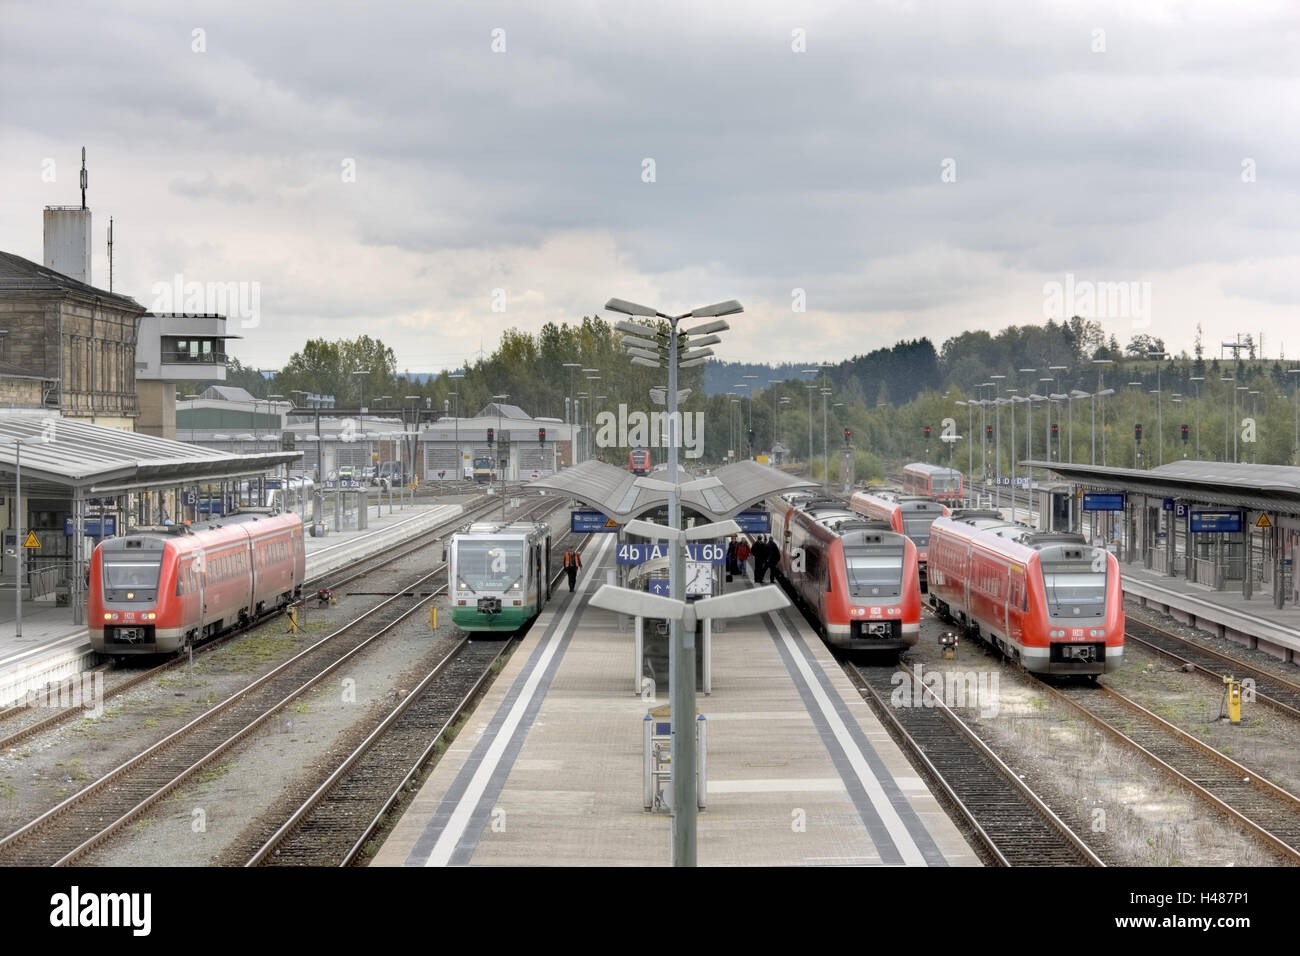 Germany, Bavaria, court, railway station, platforms, trains, Stock Photo